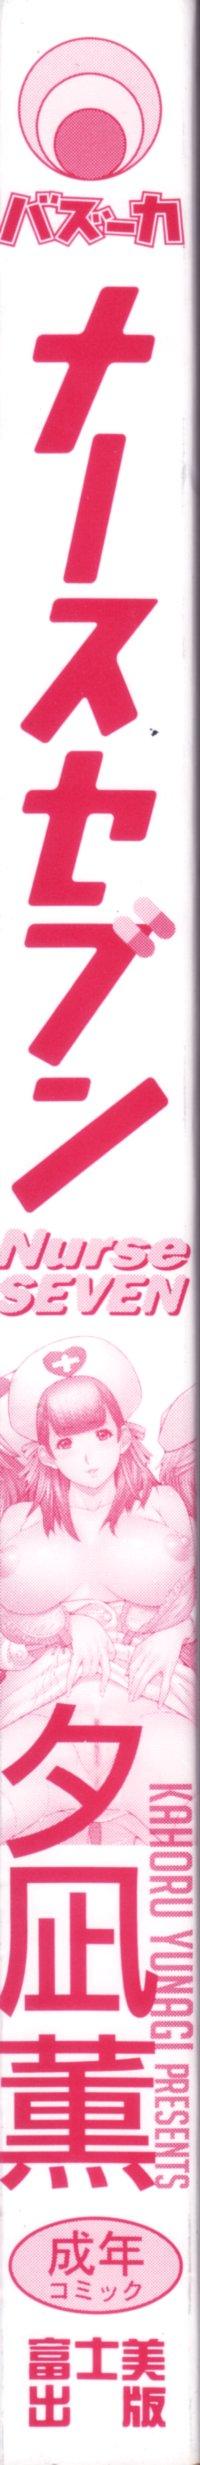 De Quatro Nurse Seven Coroa - Page 6